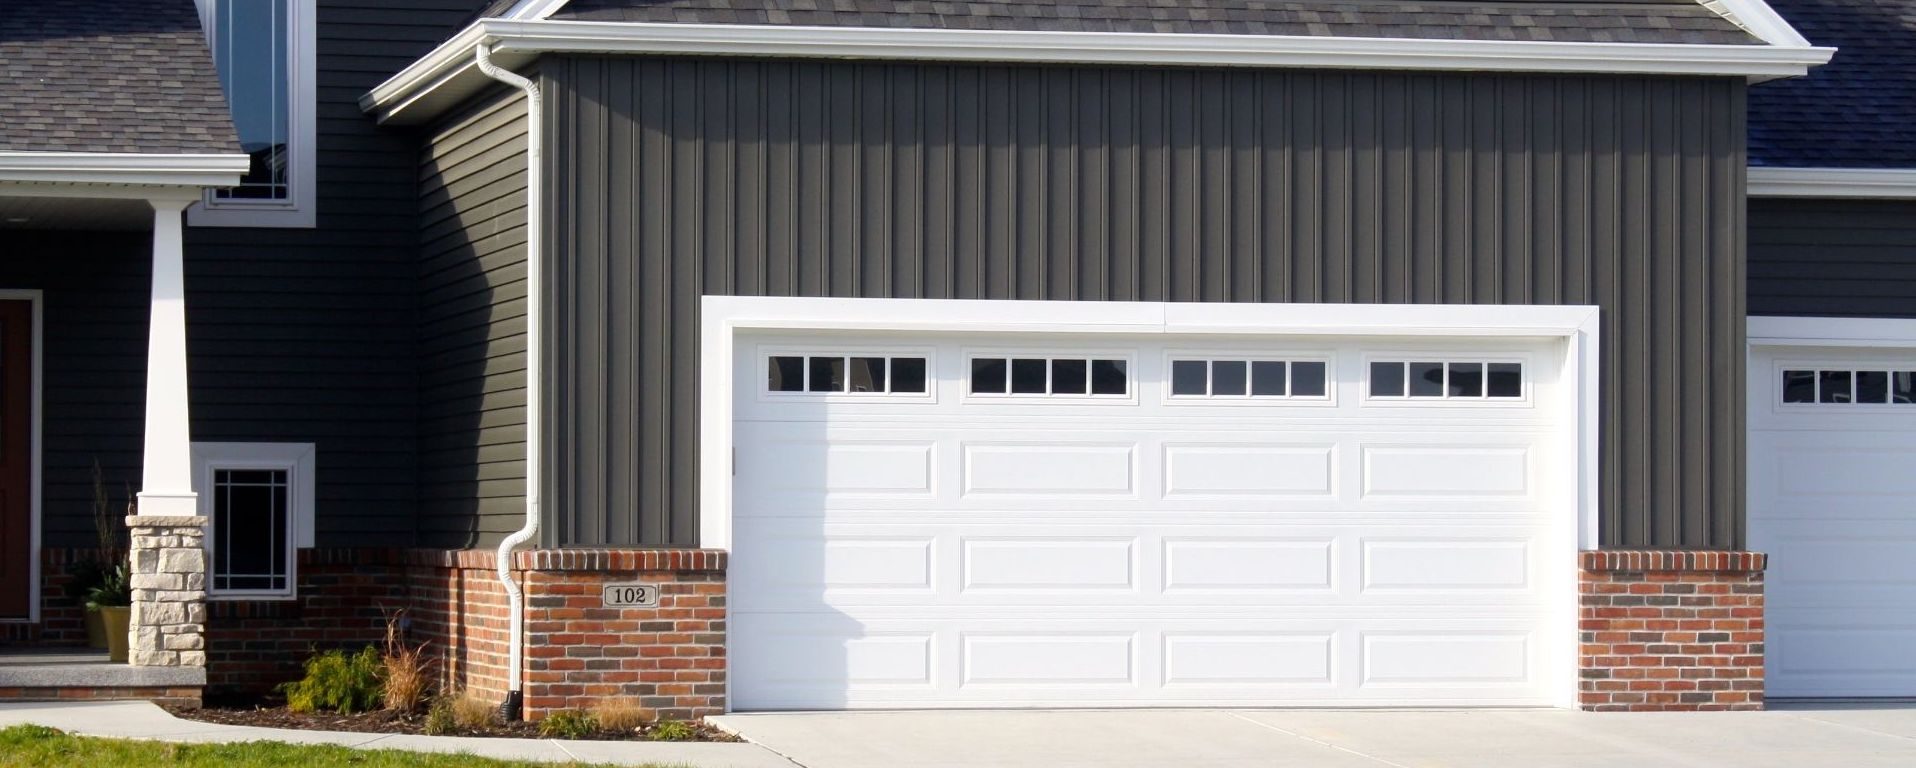 How to Choose the Best 24 Hour Garage Door Service Near Me in Connecticut?  » Trending Us